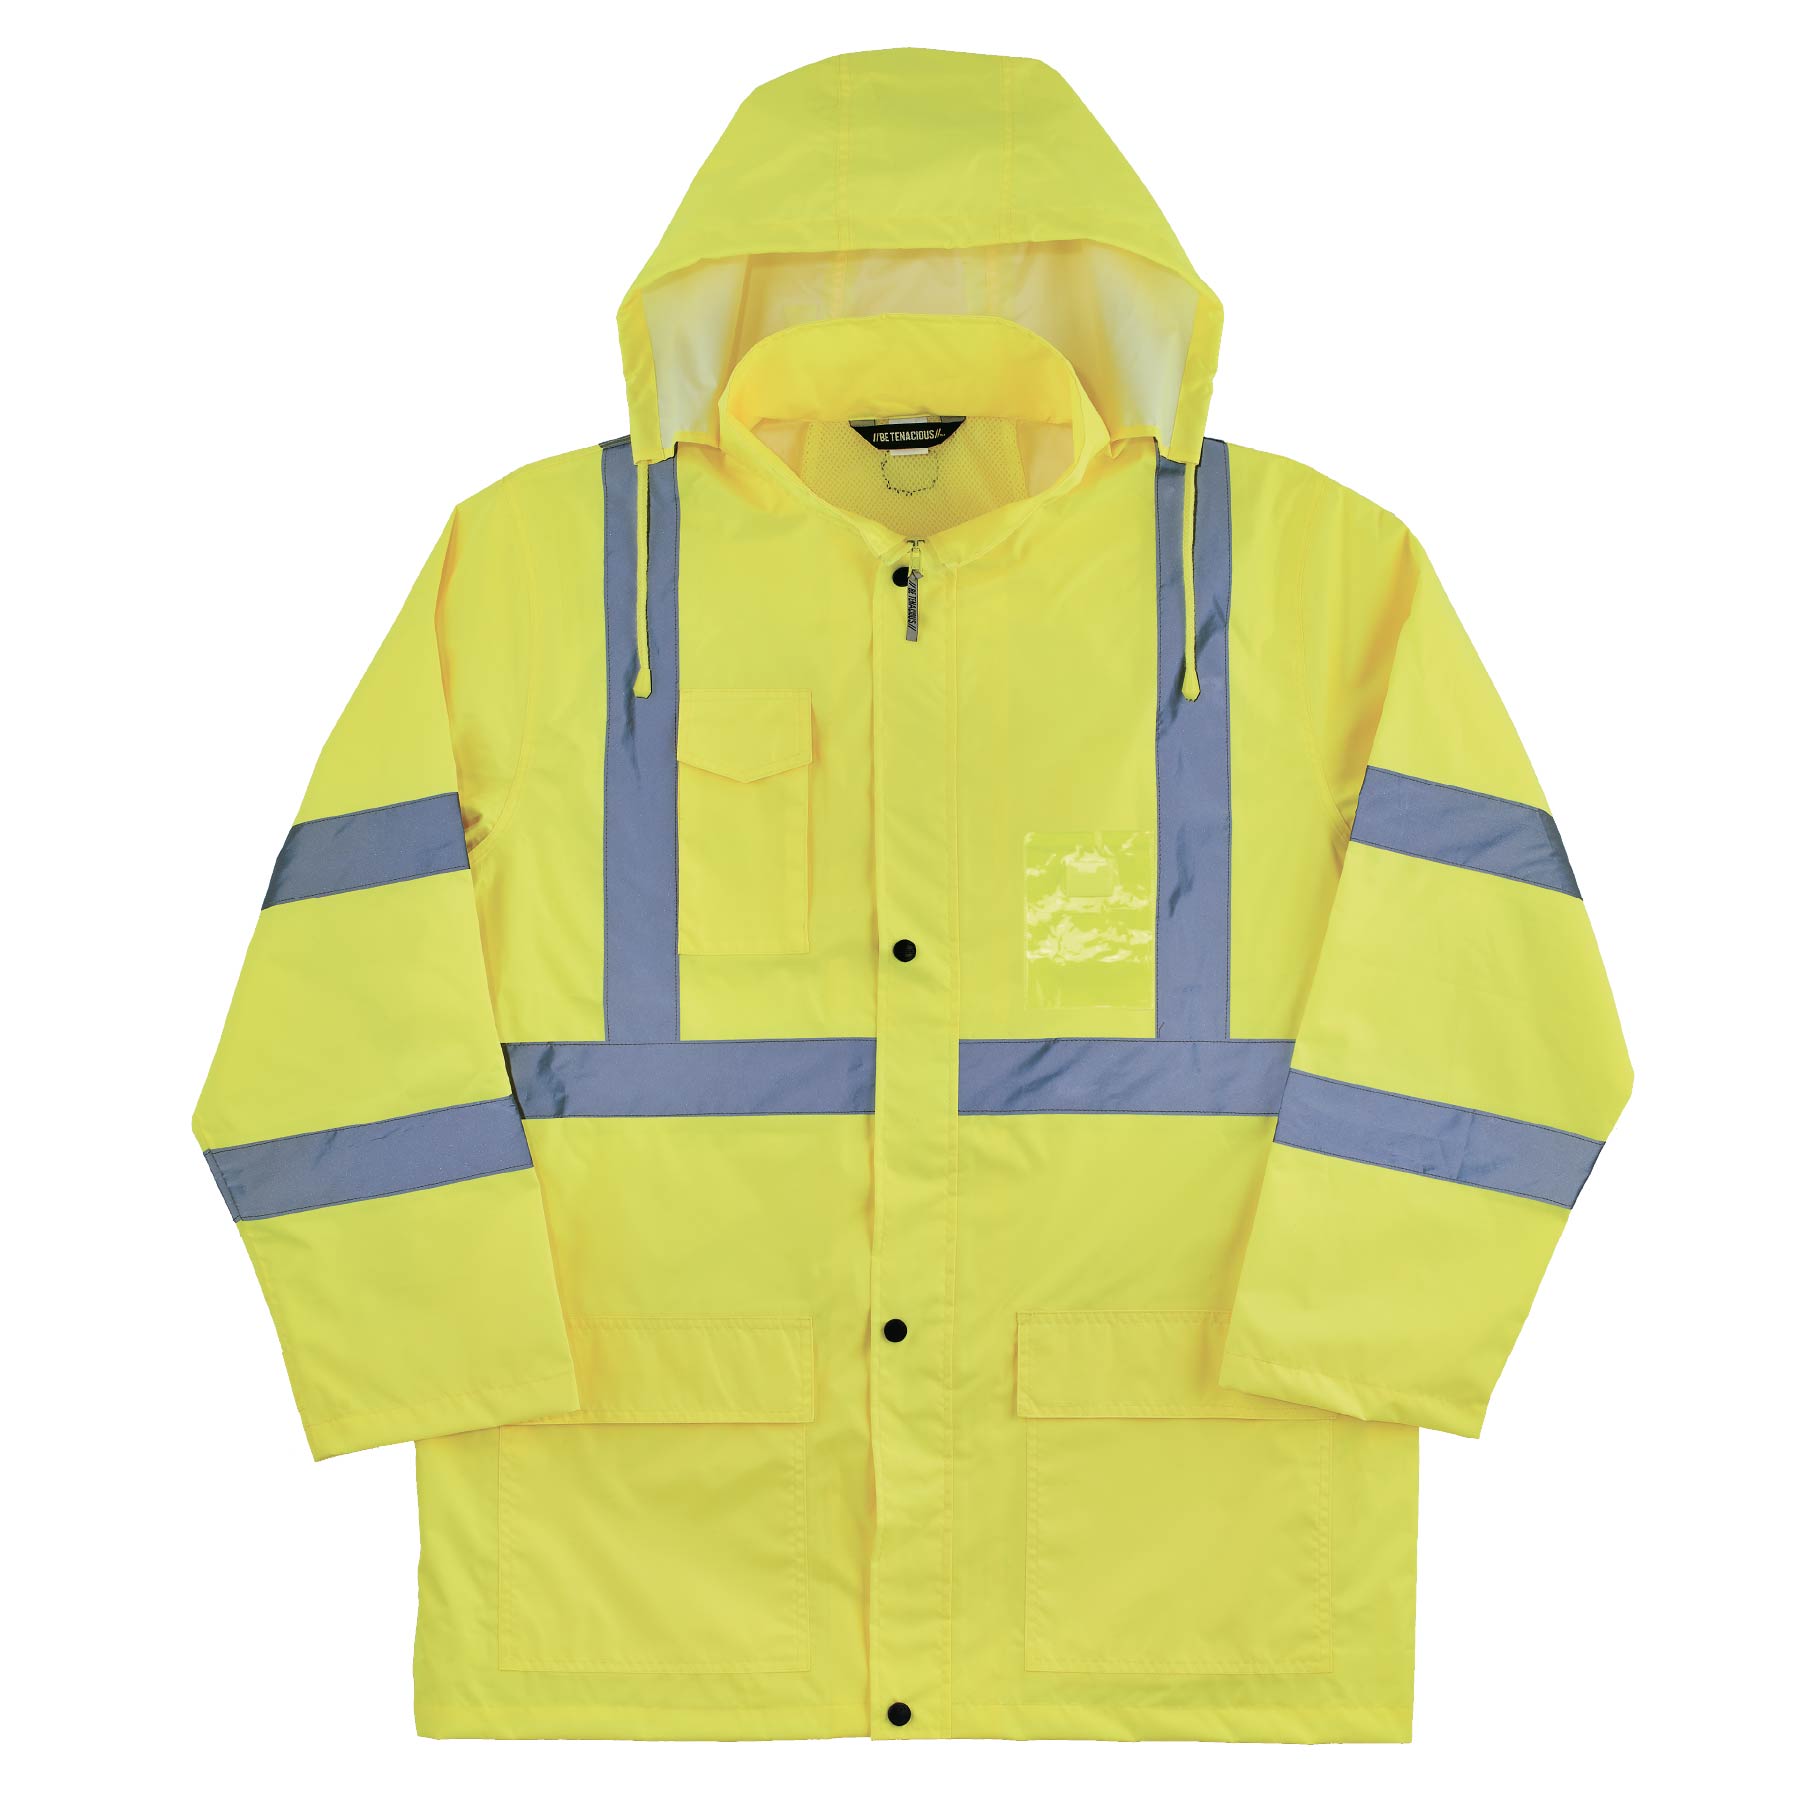 Proforce Yellow Flex Waterproof High Visibility Coat Hi-Viz Work Site Jacket 